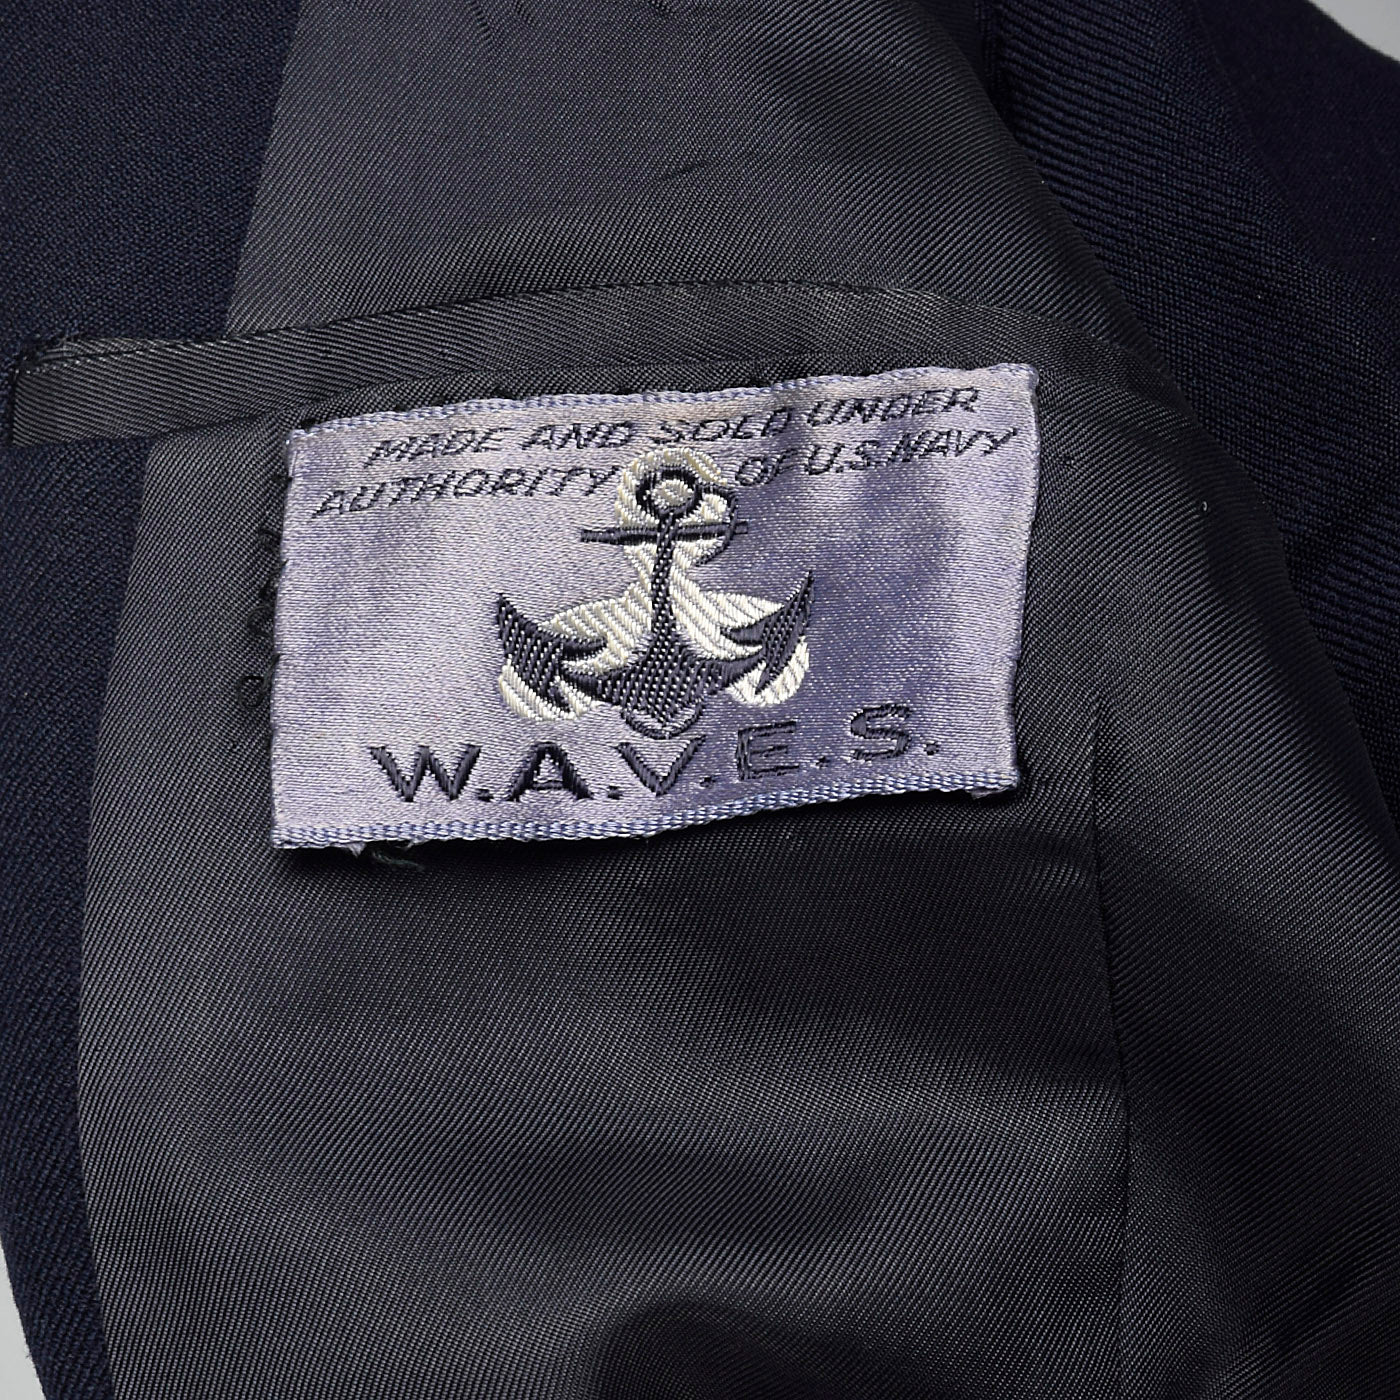 1950s Waves US Navy Military Wool Jacket in Navy Blue